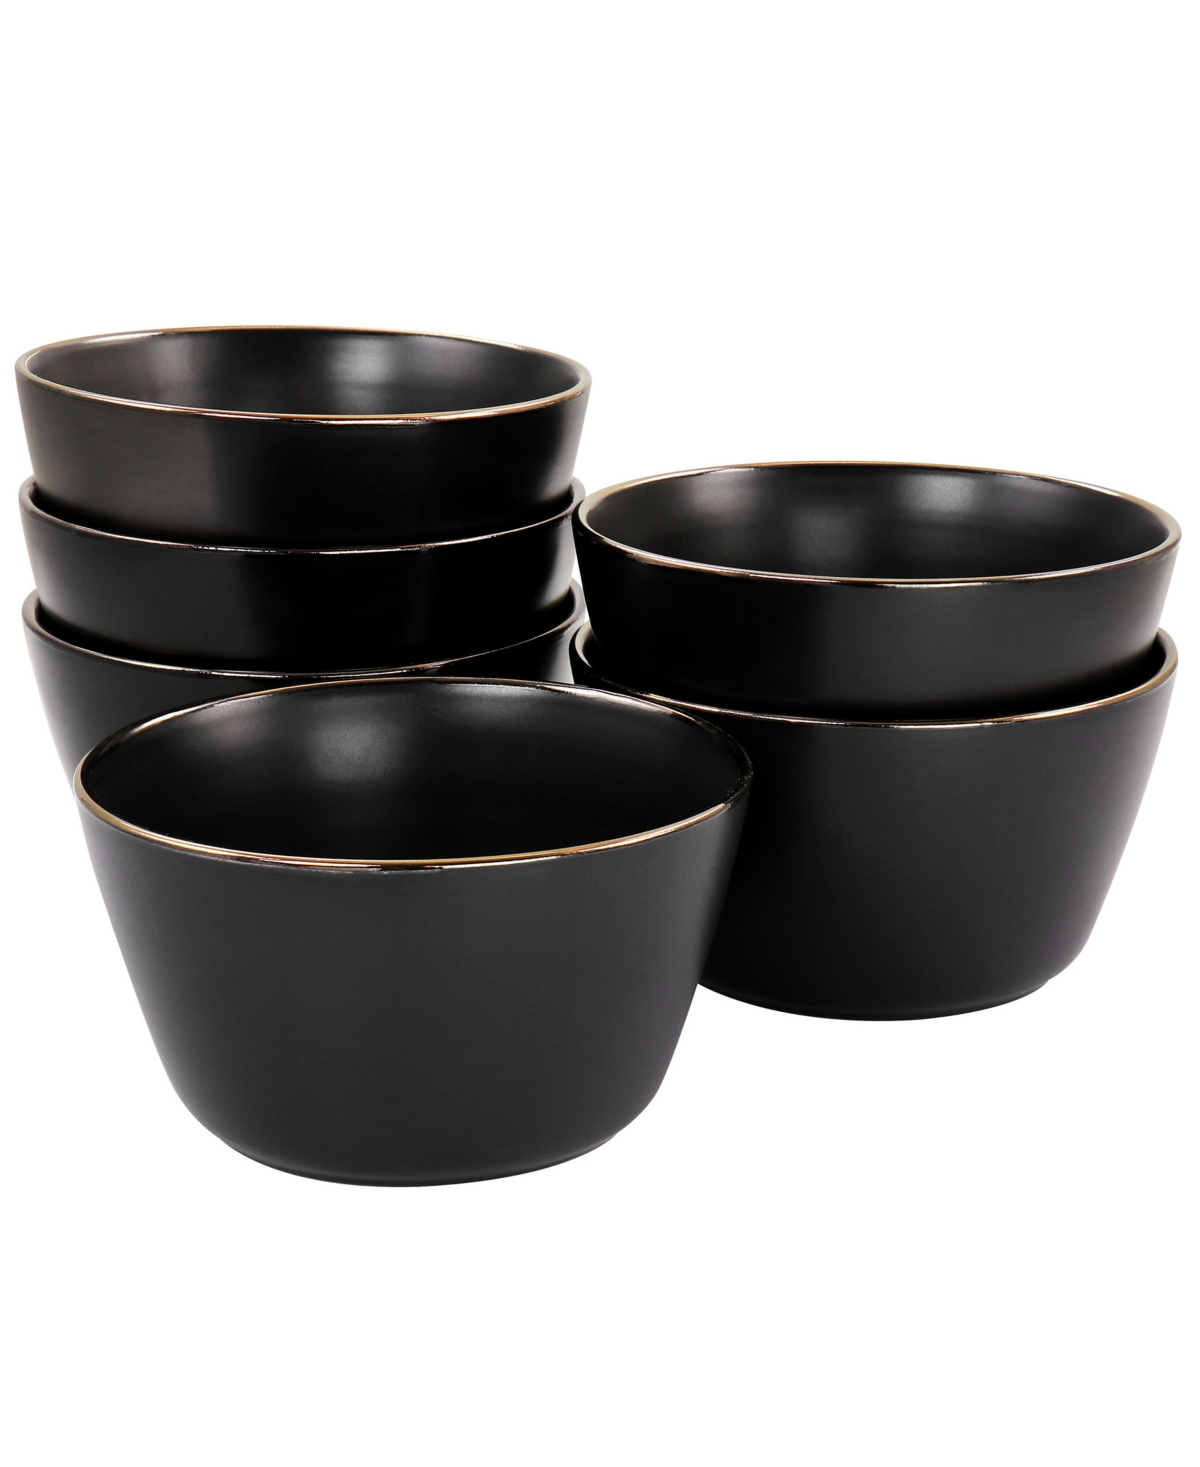 Flat, Raised Rim, Gold-Tone Trim Mateo 6 Piece Stoneware Bowl Set, Service for 6 - Matte Black with Gold Rim